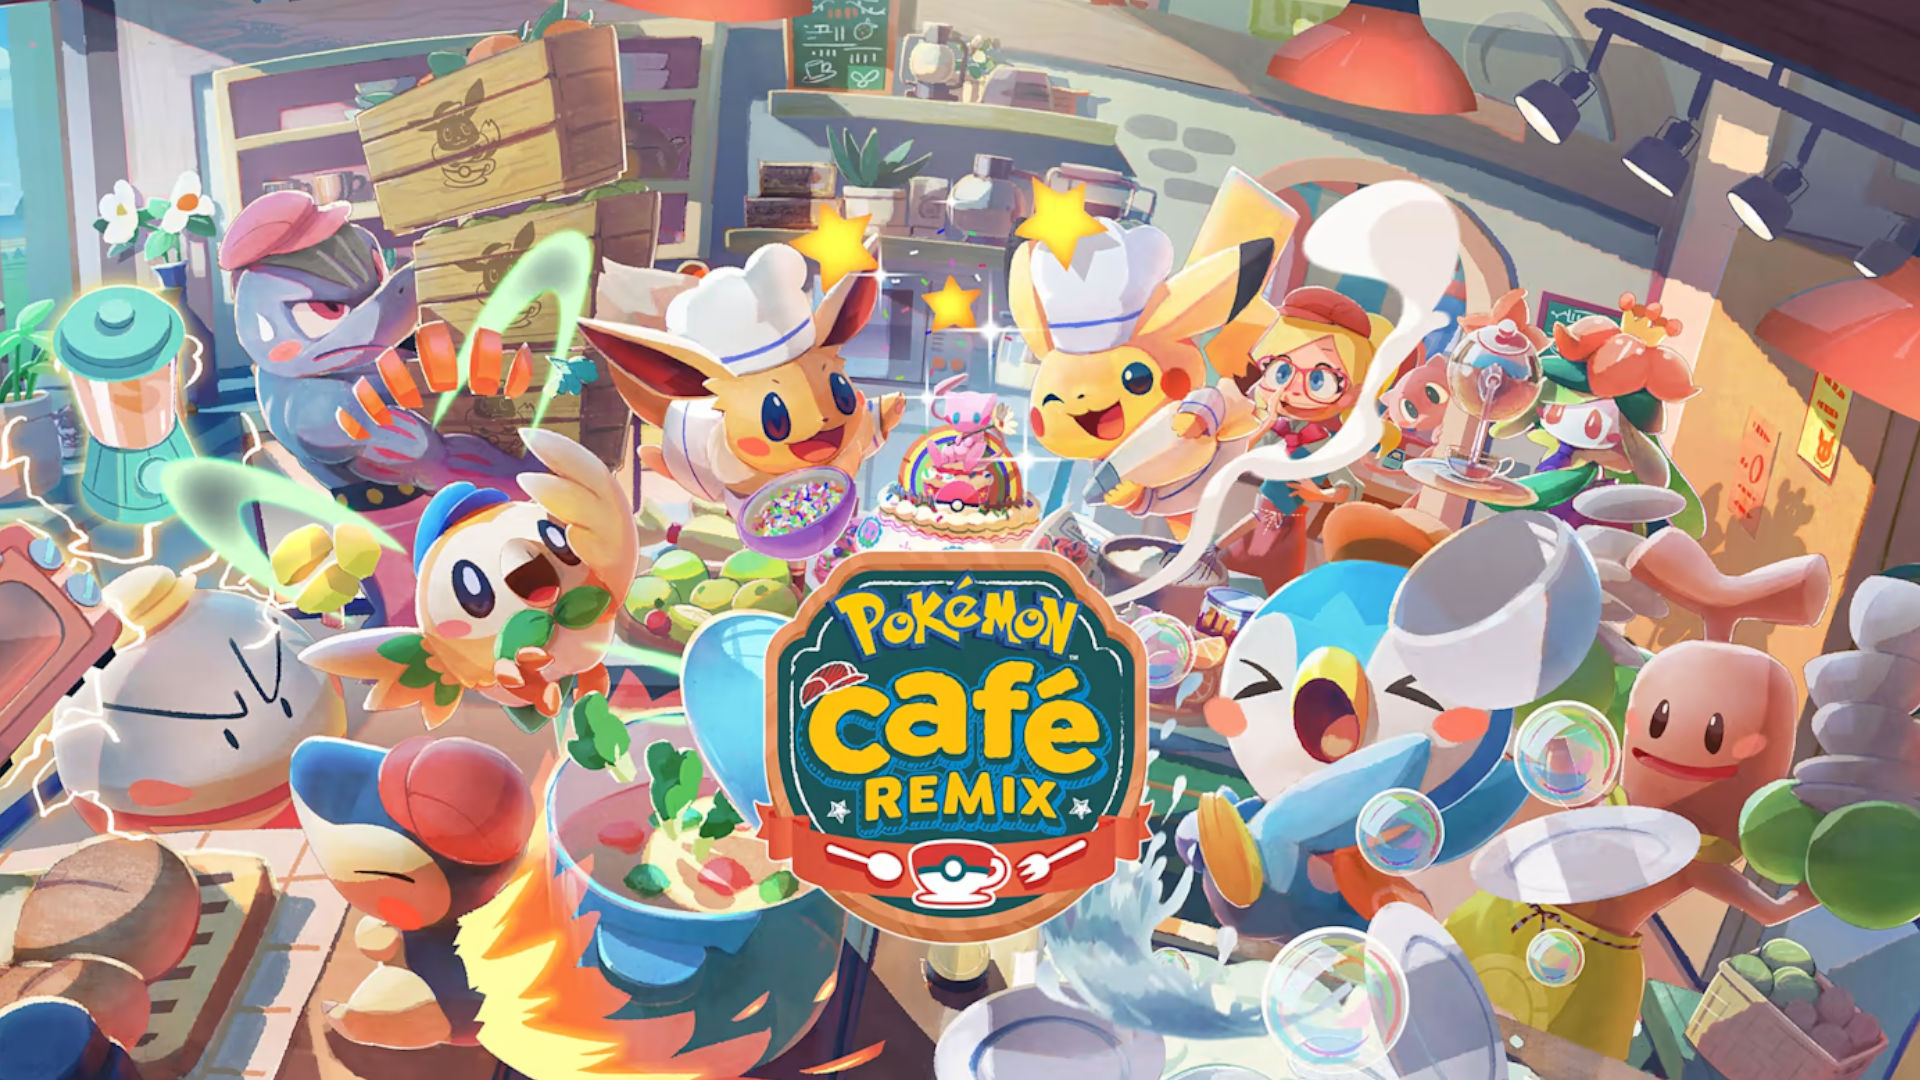 Key art for Pokemon Cafe ReMix